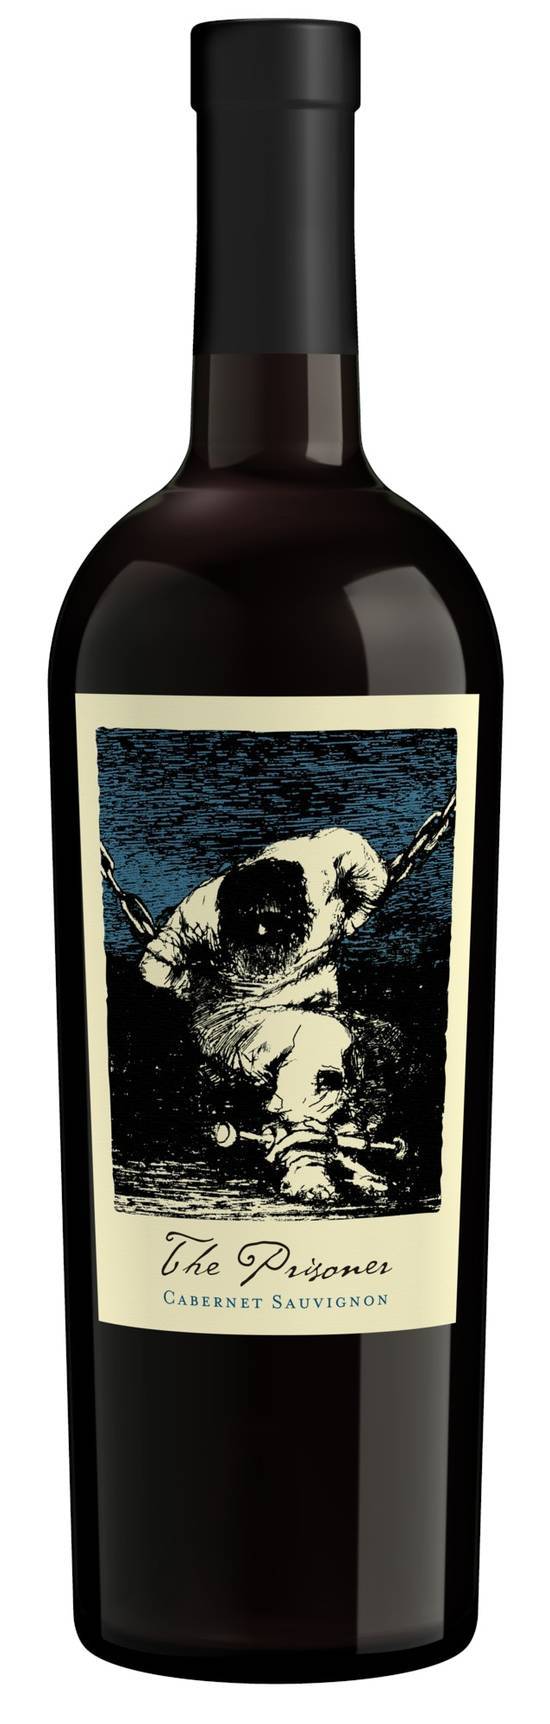 The Prisoner Napa Valley Cabernet Sauvignon Red Wine (750ml bottle)